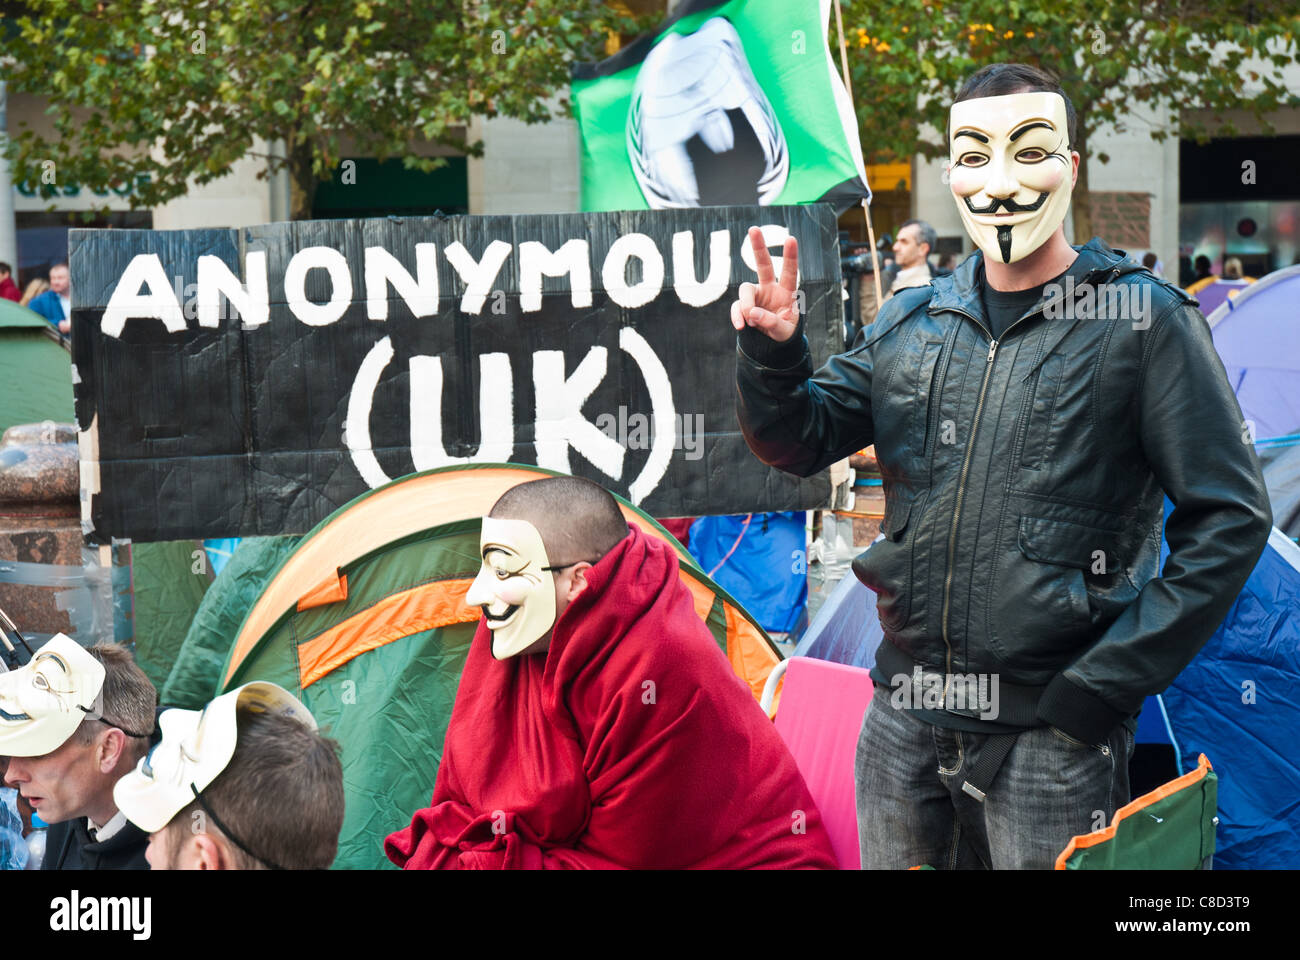 St Paul, occupy london, . 'Anonyme' group uk avec des masques de Guy Fawkes, gesticulant. Banque D'Images